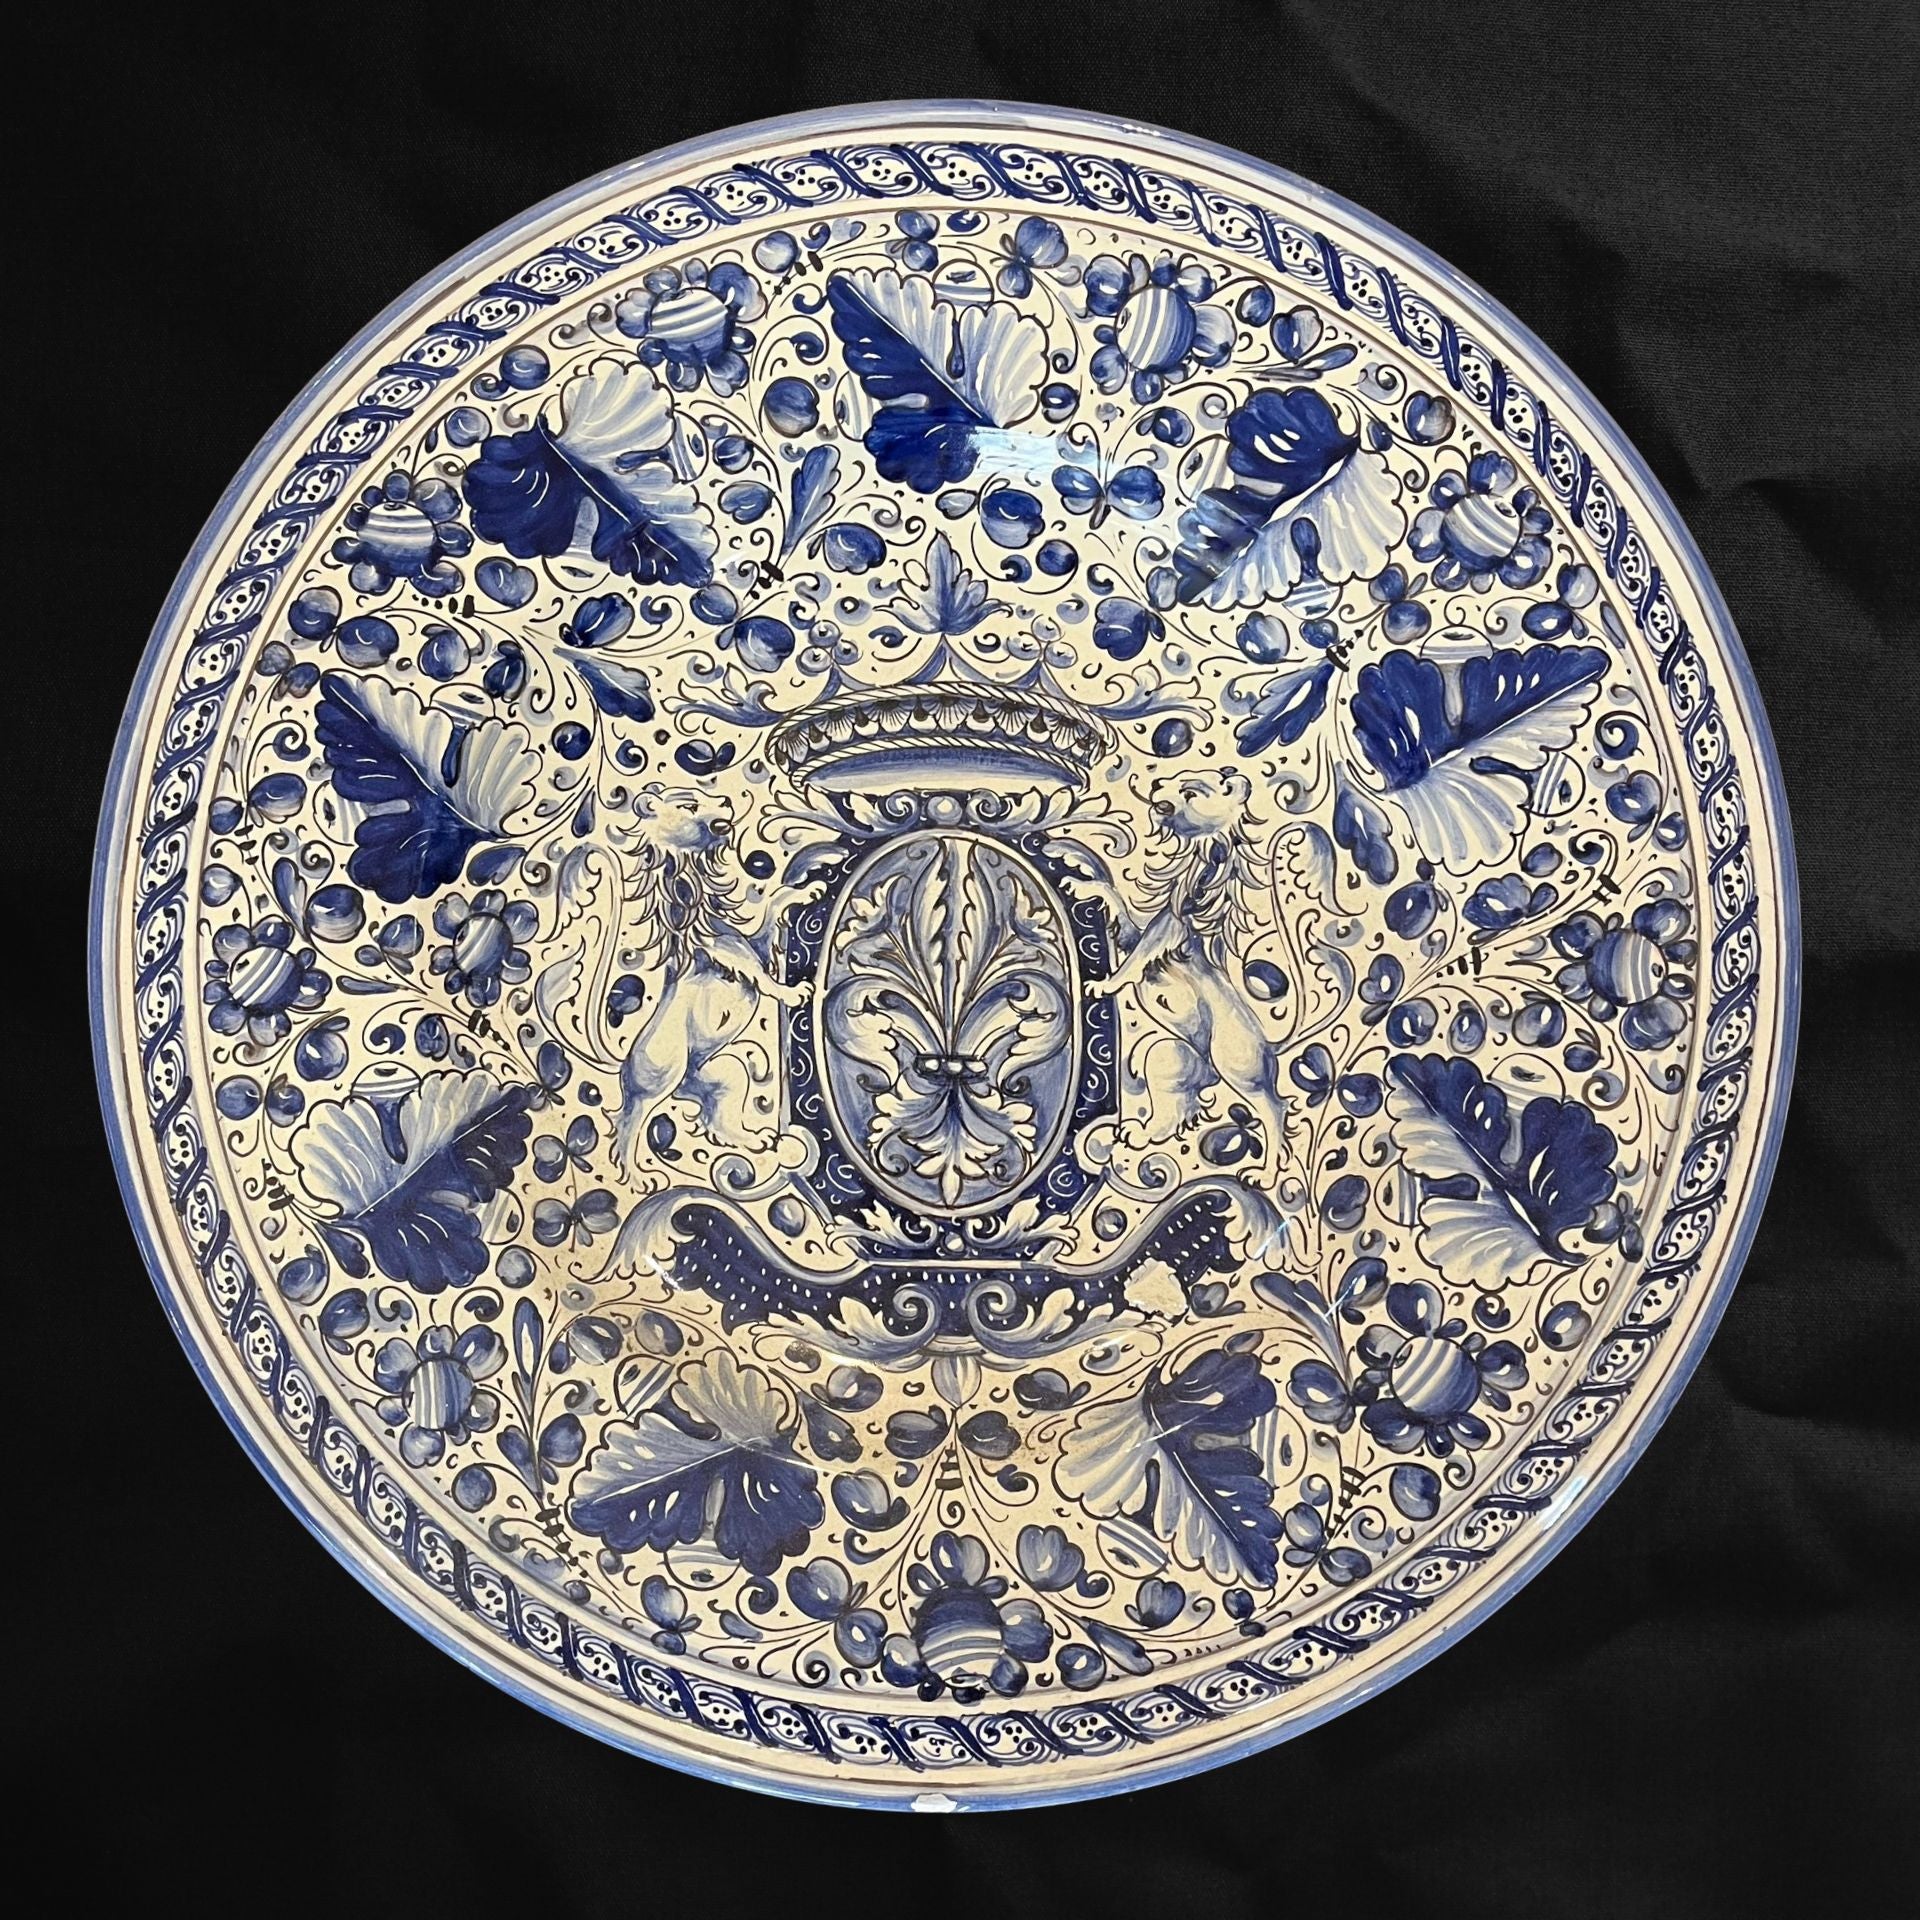 Large blue majolica plate